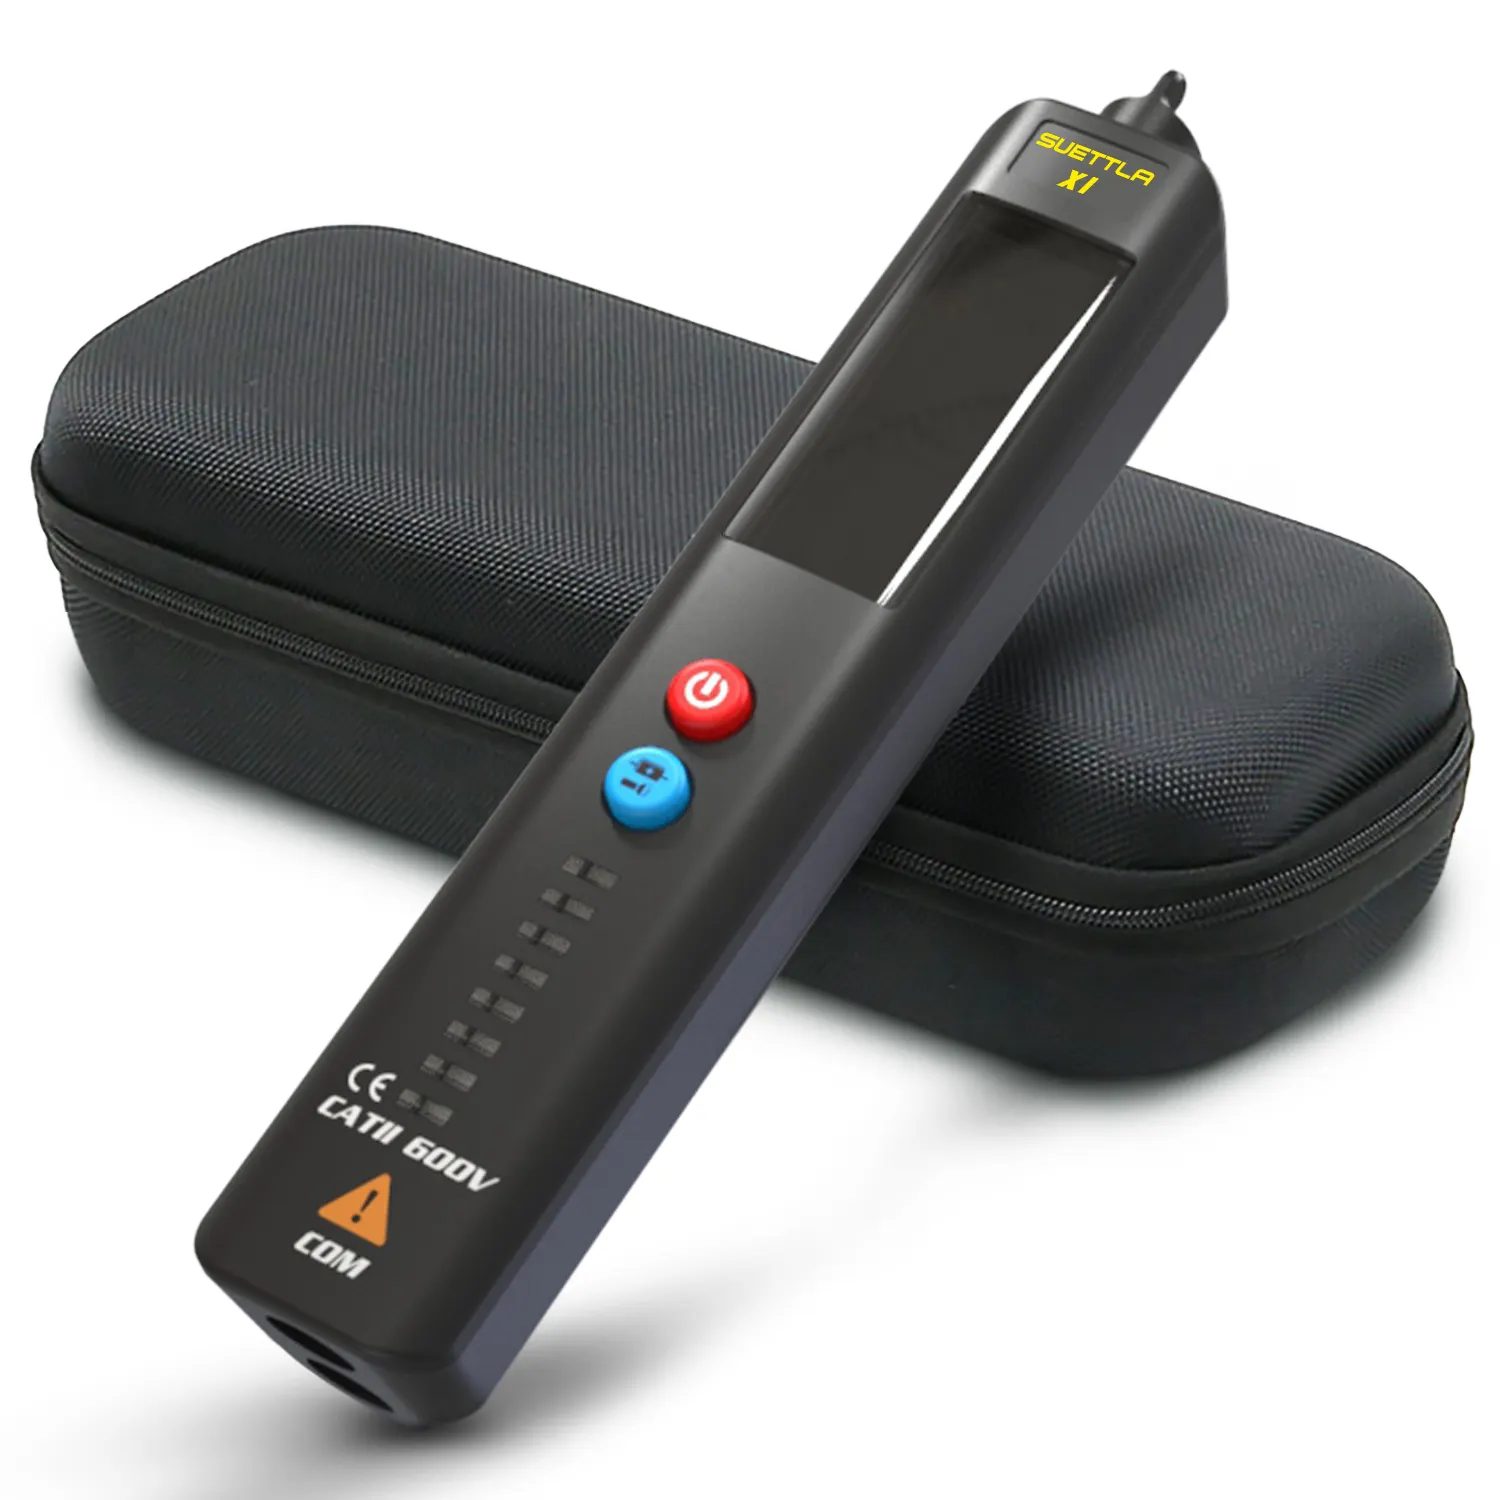 SUETTLA X1 Auto Intelligent Sensor Pen Tester 6000 Counts Non Contact pen detector Voltage Meter Digital Multimeter